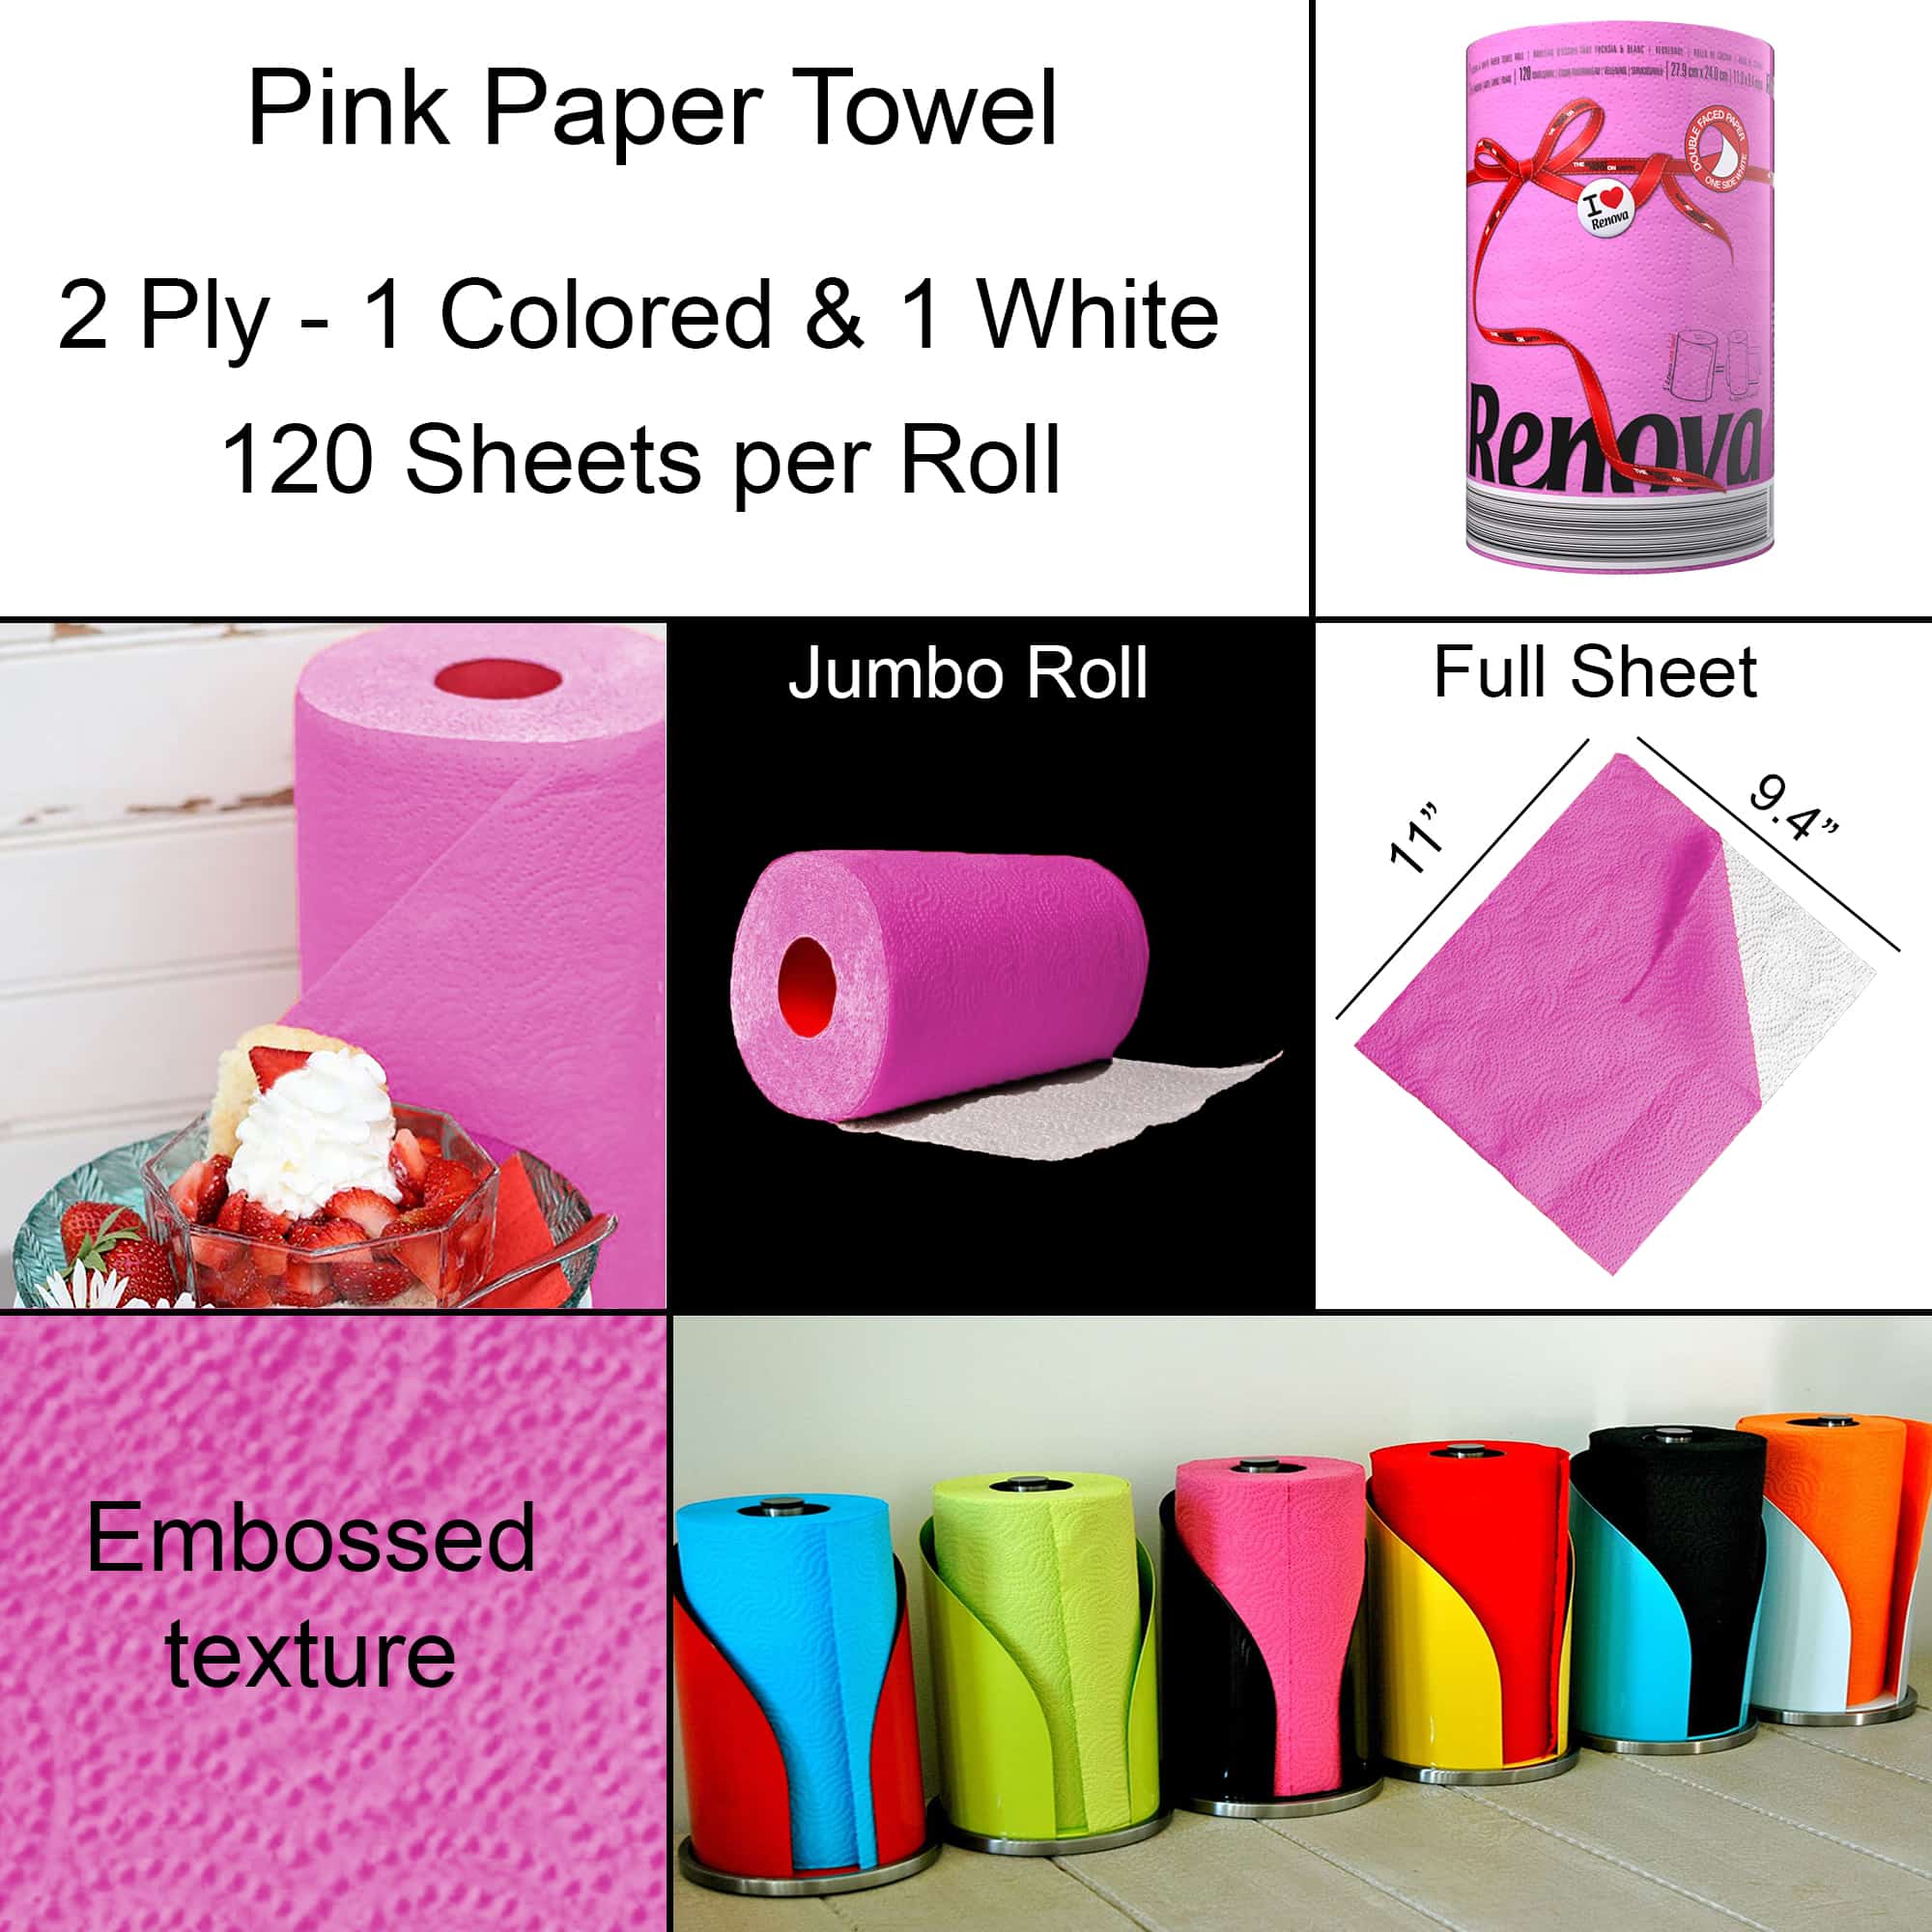 Renova Pink Toilet Paper Blister Pack, 2 Rolls, 140 Sheets Per Roll 